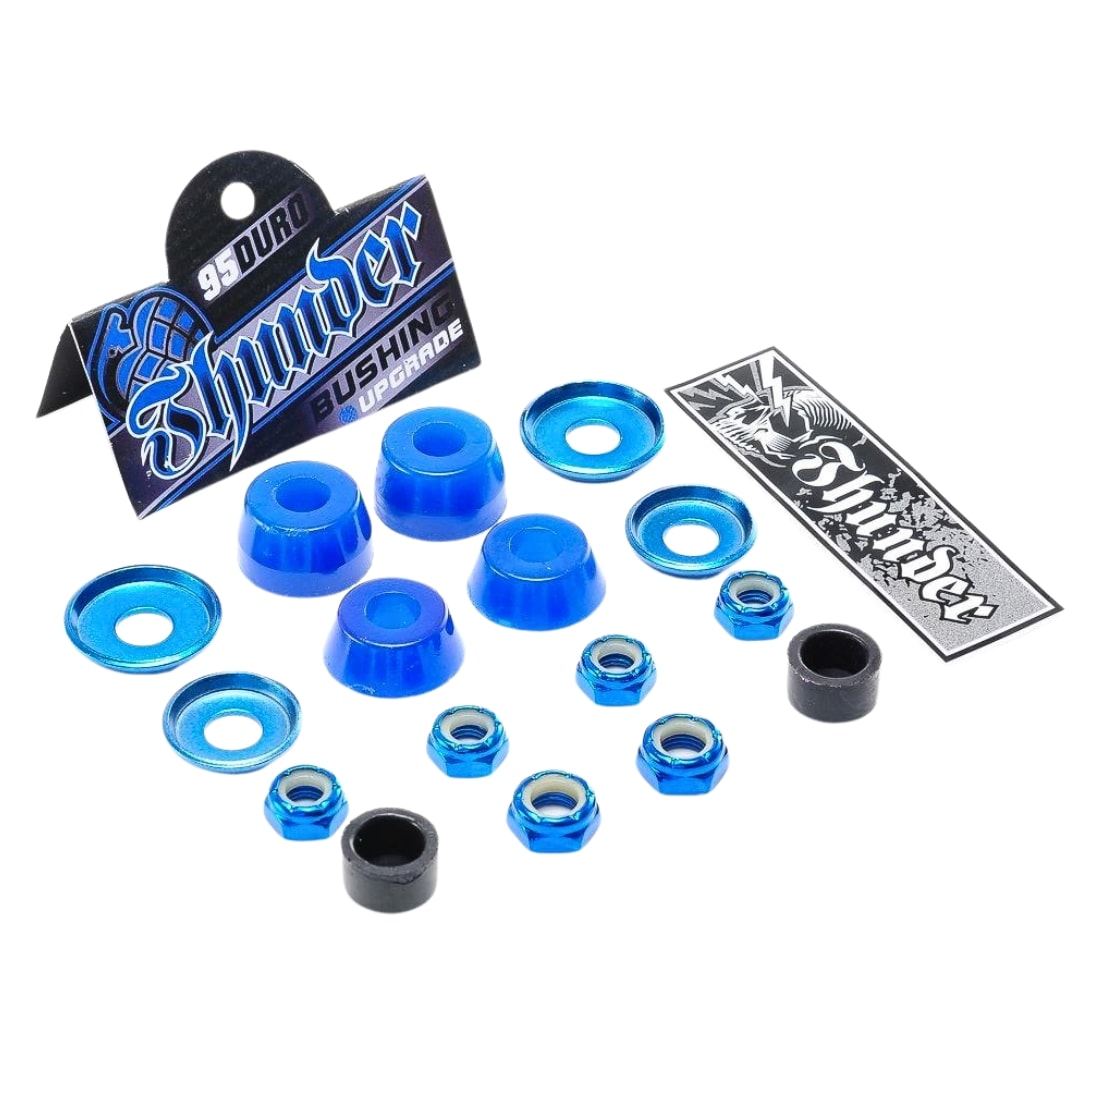 Thunder 95 Duro Rebuild Kit (Bushings/Nuts/Pivot Cup/Washers) - Blue - Skateboard Bushings by Thunder